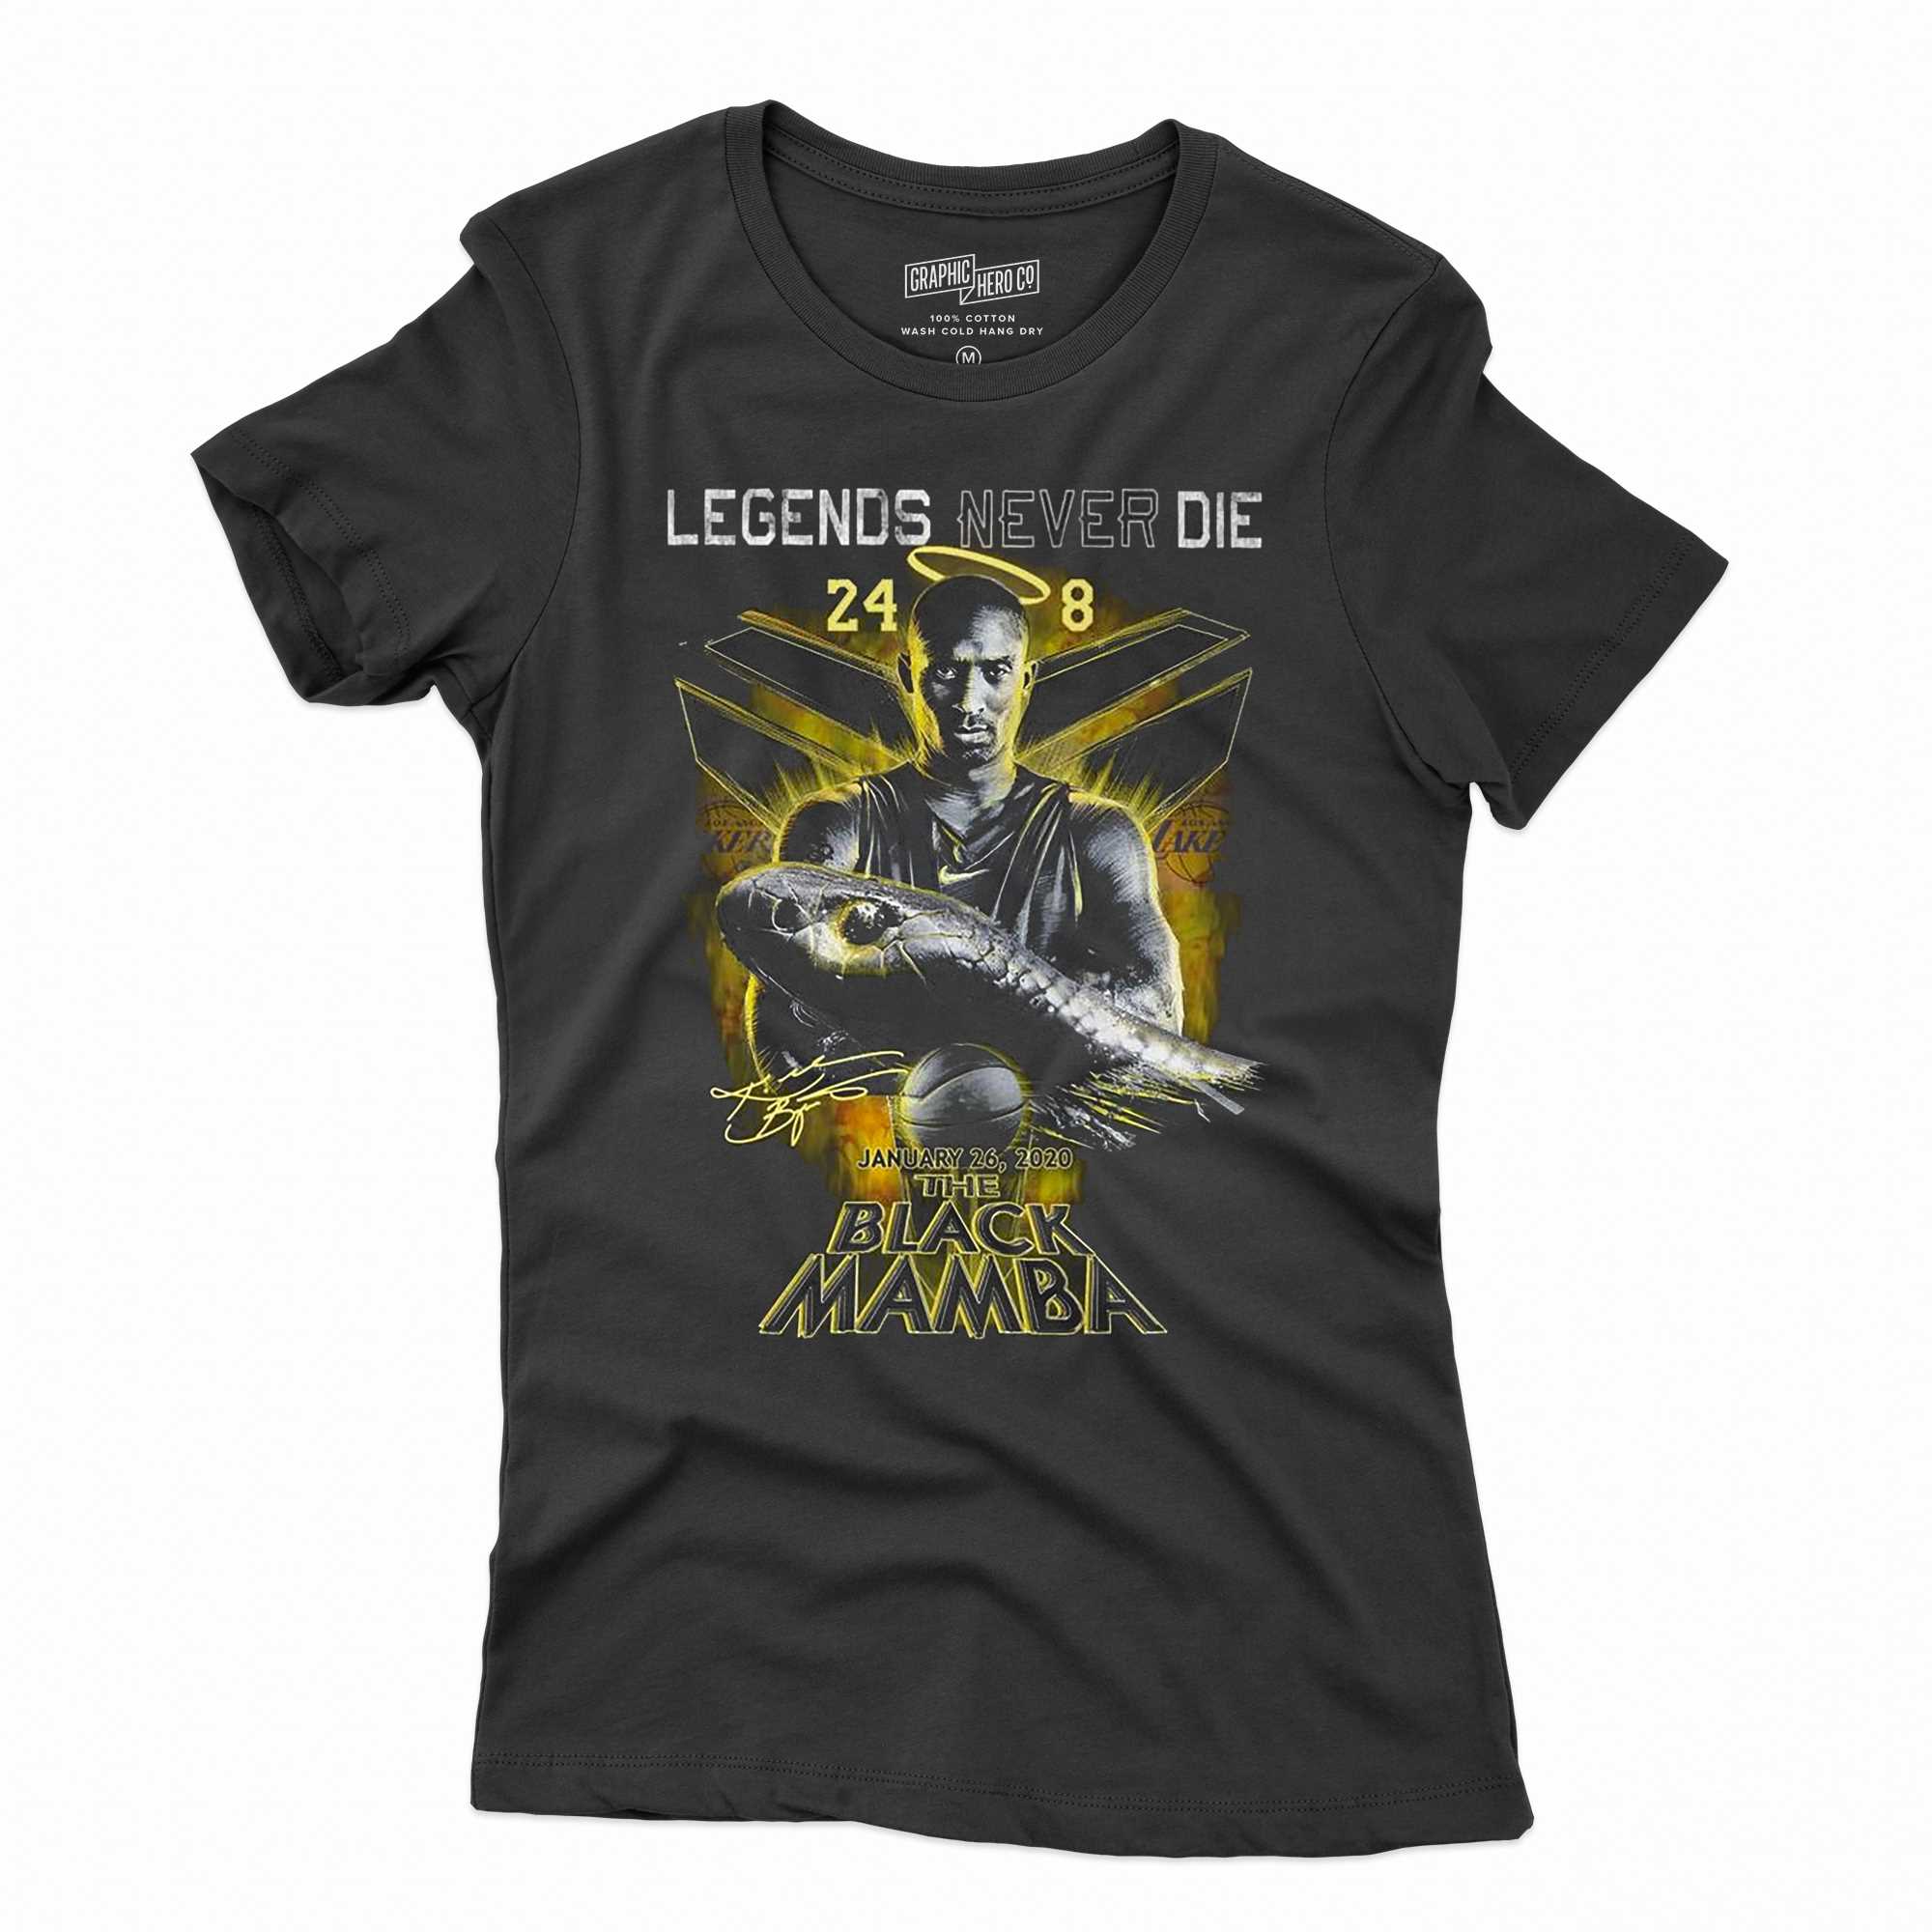 Legends Never Die January 26 2020 The Black Mamba T-Shirt